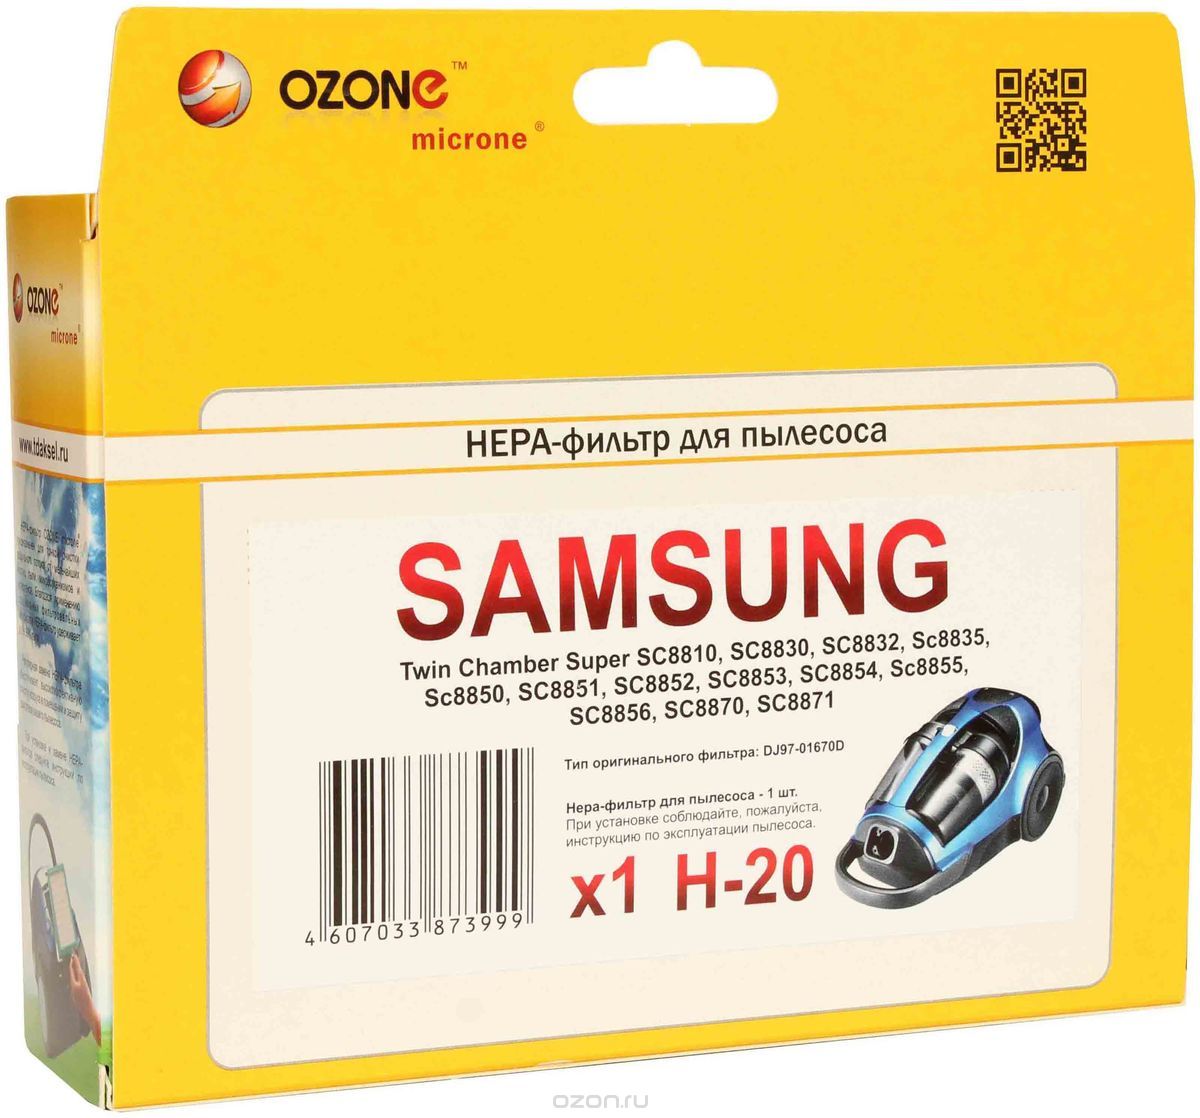 Ozone H-20     Samsung